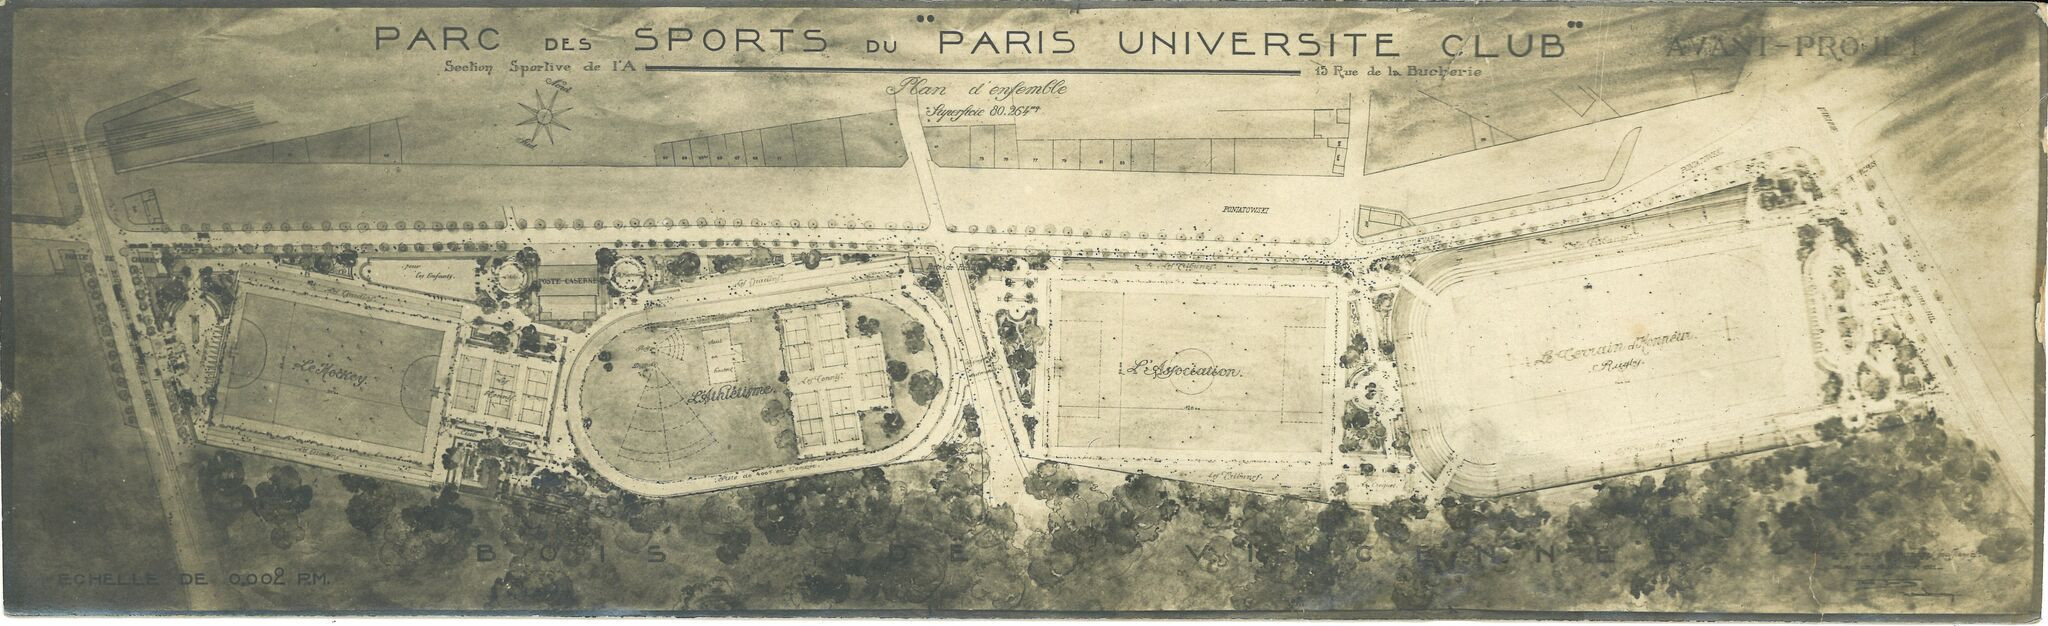 Jean Petitjean was instrumental in the establishment of the Paris University Club sports complex in Paris ©FISU